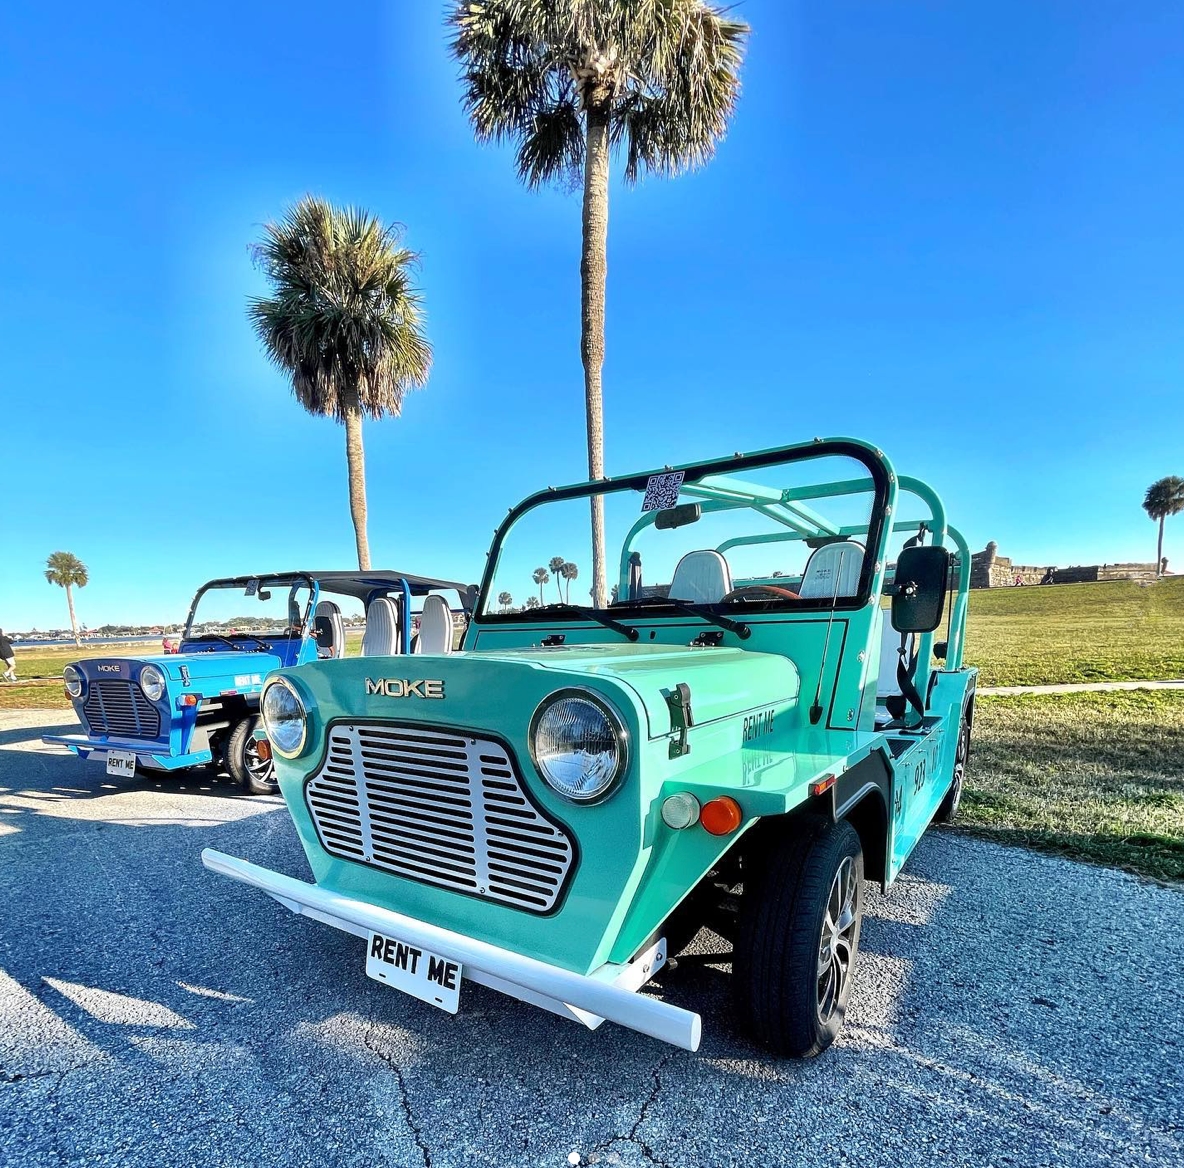 Seaside Adventures Moke and slingshot rentals in St. Augustine and Jacksonville